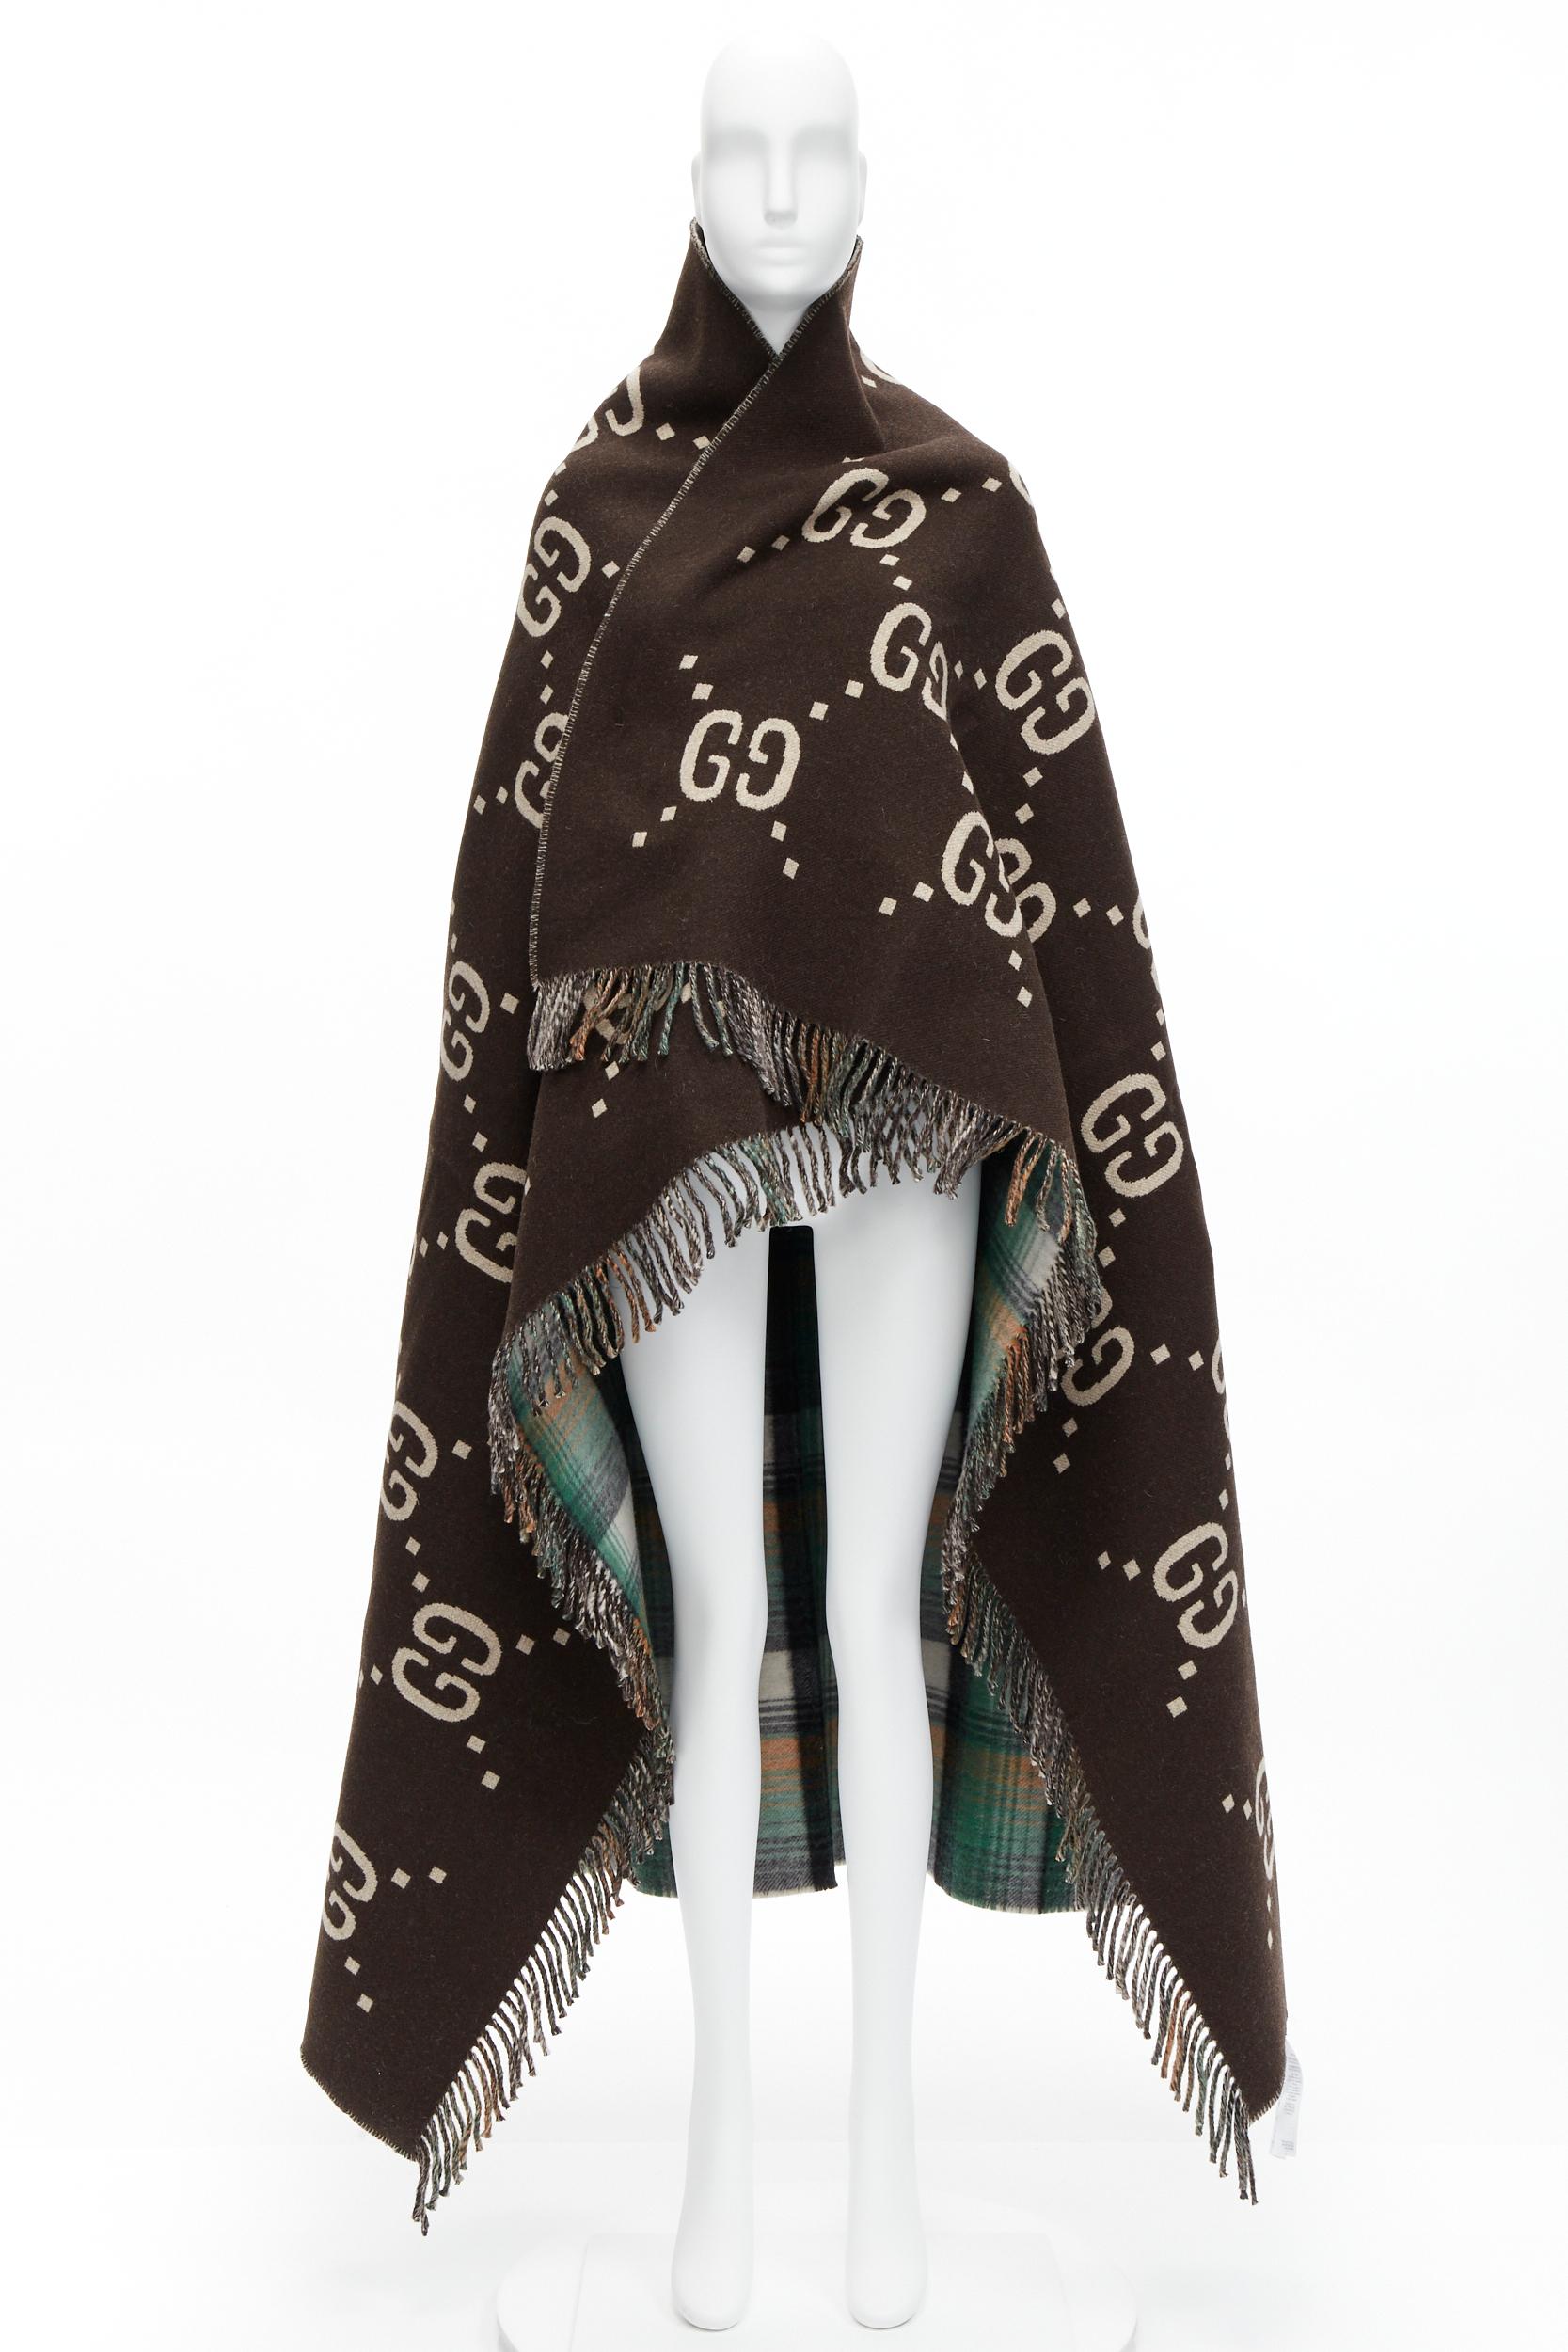 GUCCI 100% wool green red plaid tartan brown GG monogram blanket scarf For Sale 5